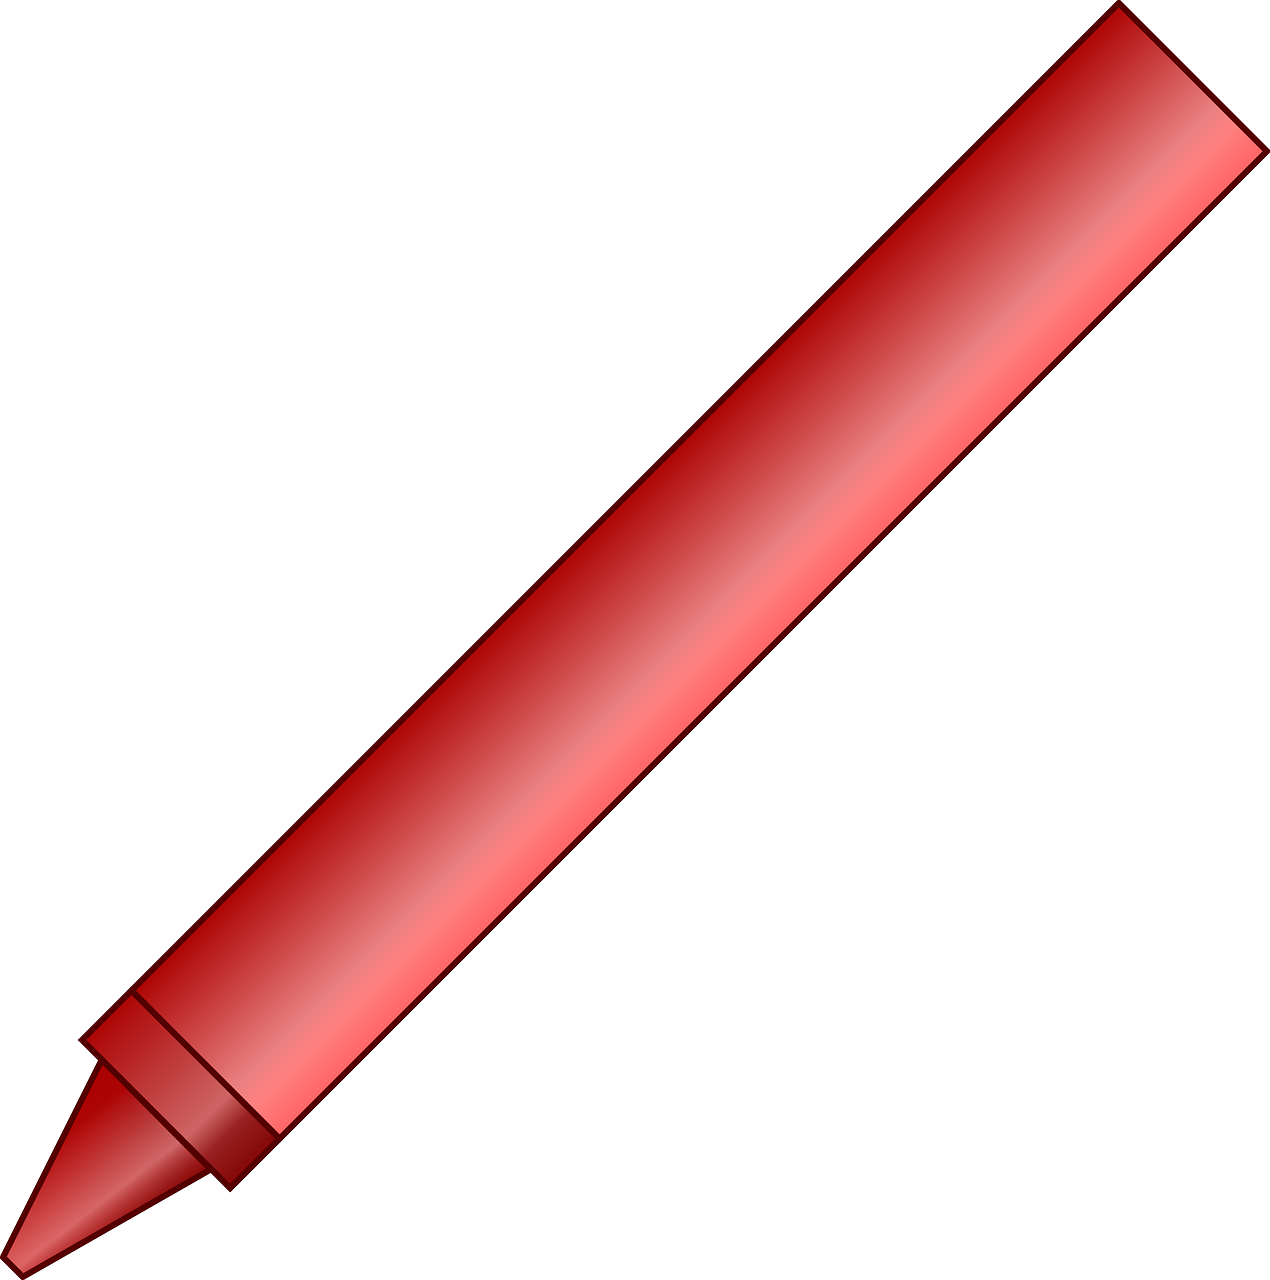 crayon red pen free photo